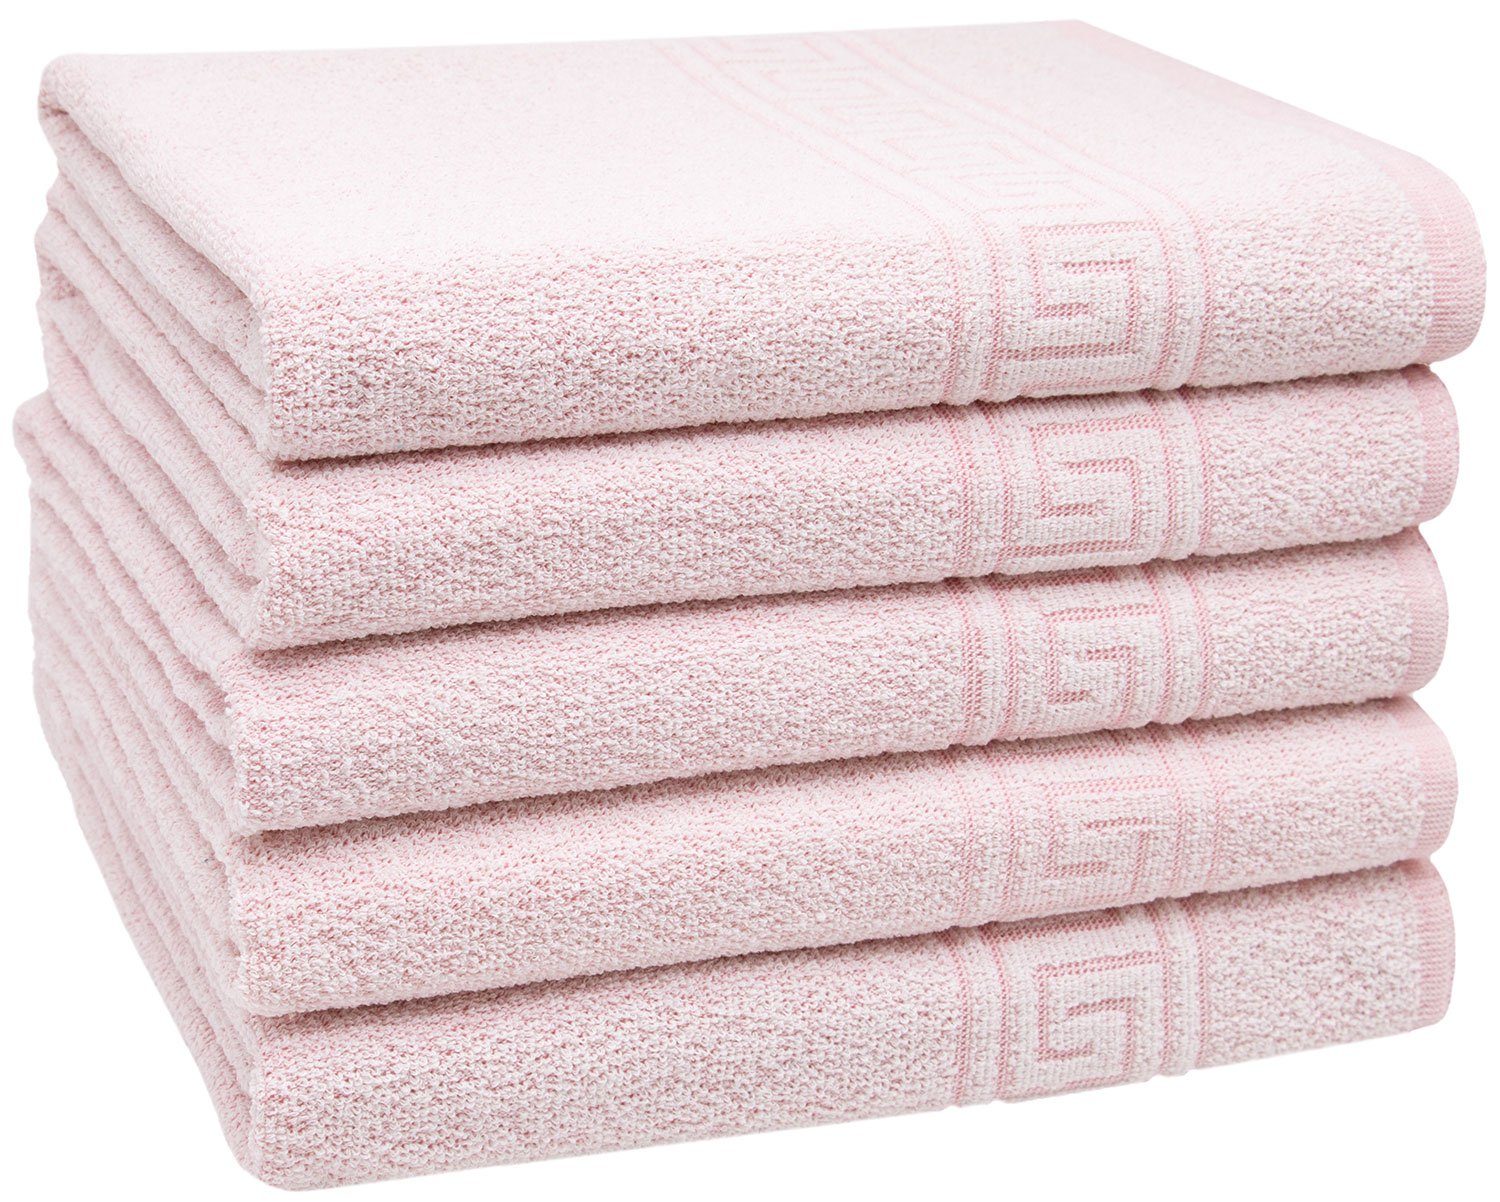 ZOLLNER Duschtücher, Glattvelours (5-St), 70 x 140 cm, 80% Baumwolle, 20% Polyester, vom Hotelwäschespezialisten rosa | Saunahandtücher